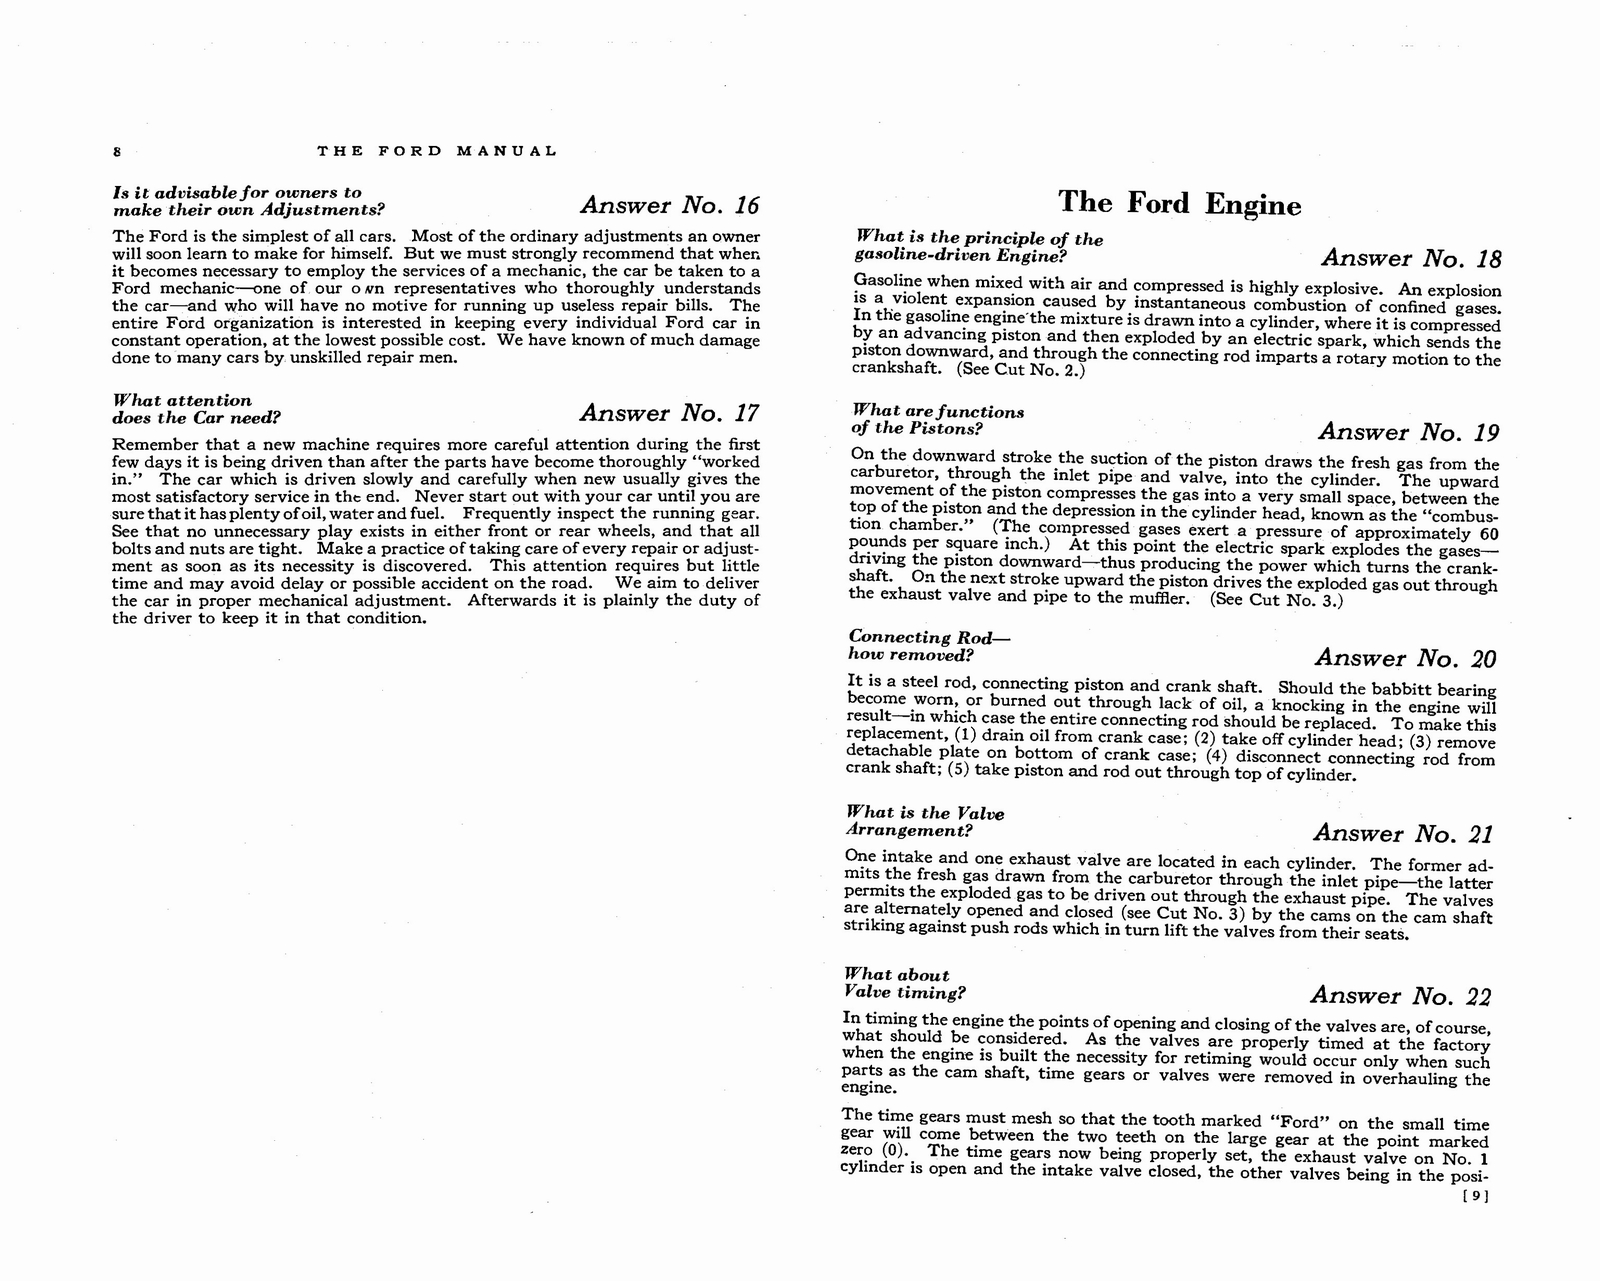 n_1925 Ford Owners Manual-08-09.jpg